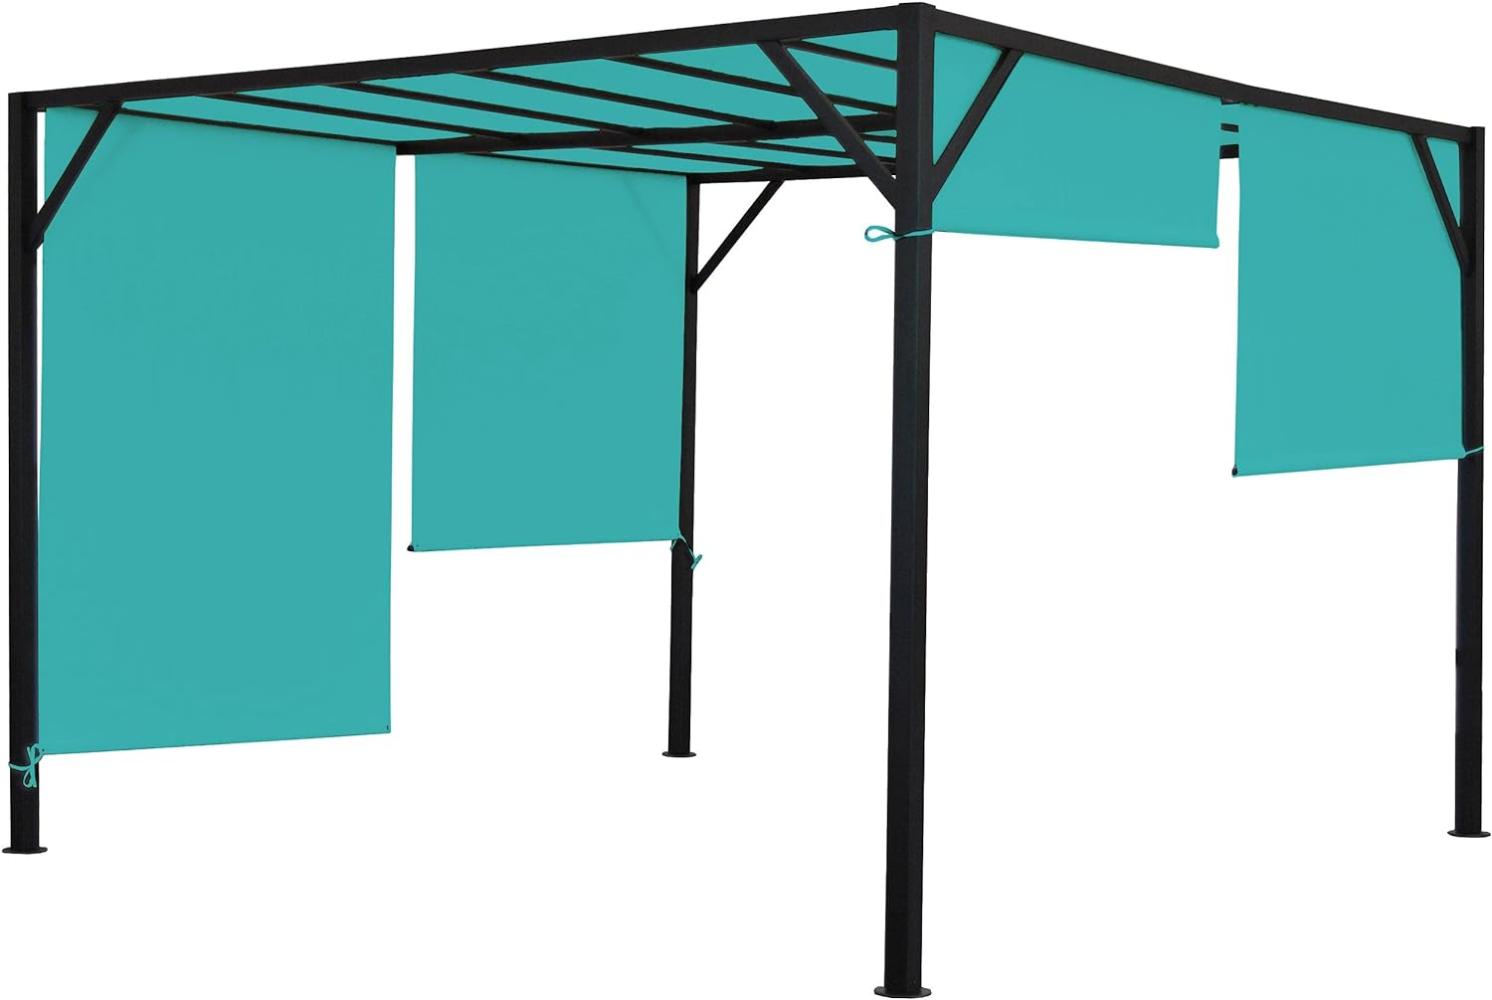 Pergola Baia, Garten Pavillon Terrassenüberdachung, stabiles 6cm-Stahl-Gestell + Schiebedach türkis-blau ~ 3x4m Bild 1